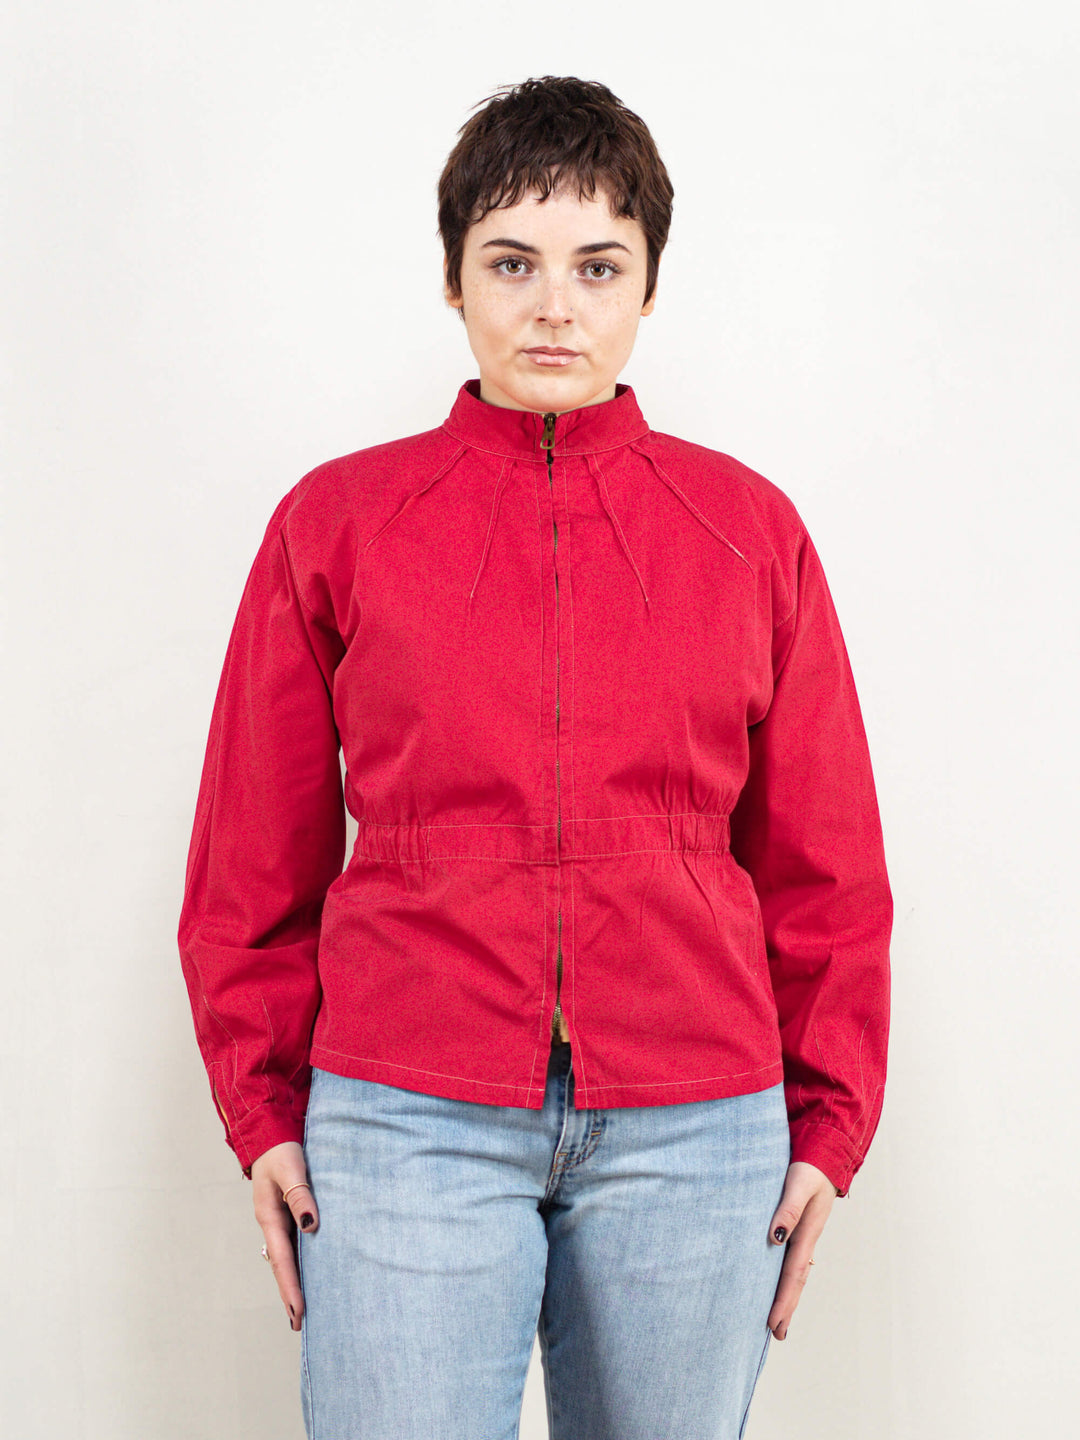 Vintage Cotton Jacket 70s red windbreaker jacket cotton high neck spring jacket plain lightweight outdoor jacket vintage clothing size small